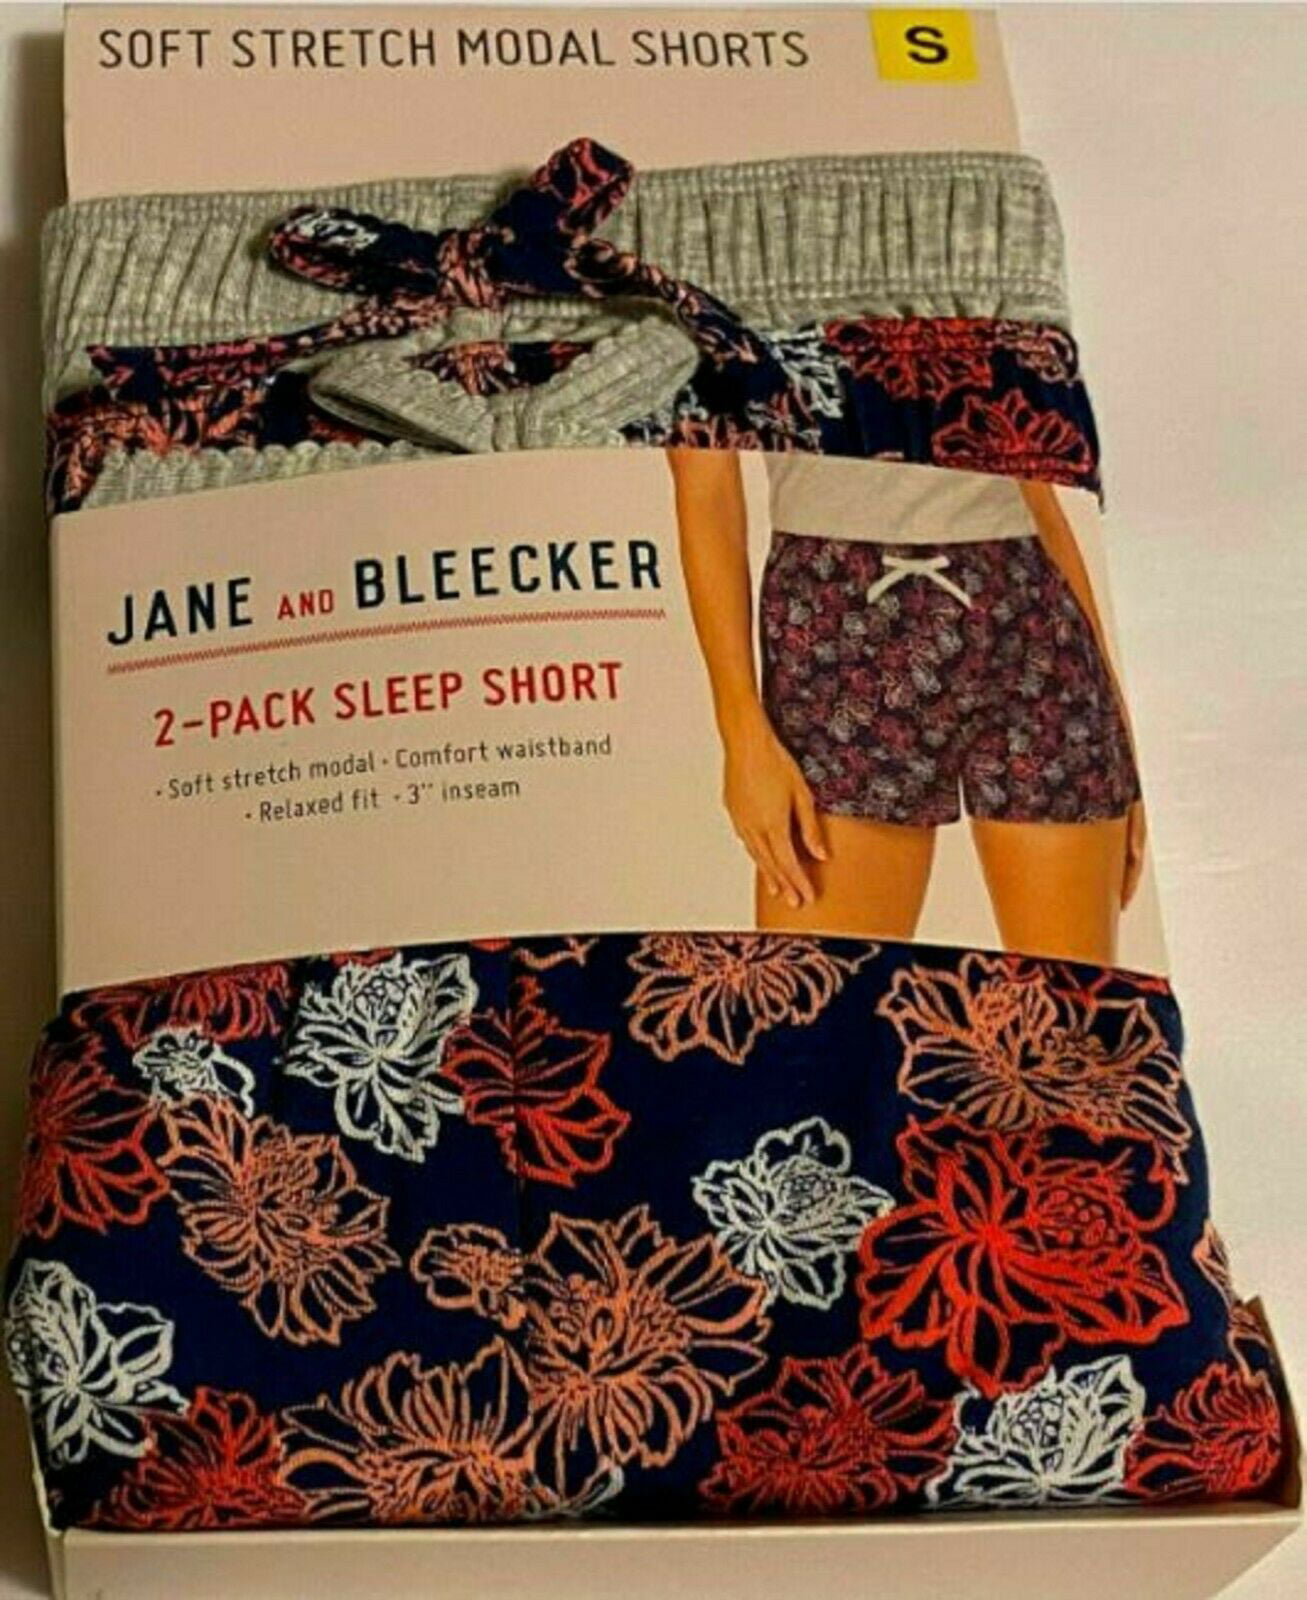 NEW!! Jane and Bleecker Women's 2-Pack Sleep Shorts Plum/Navy Stripe & Small